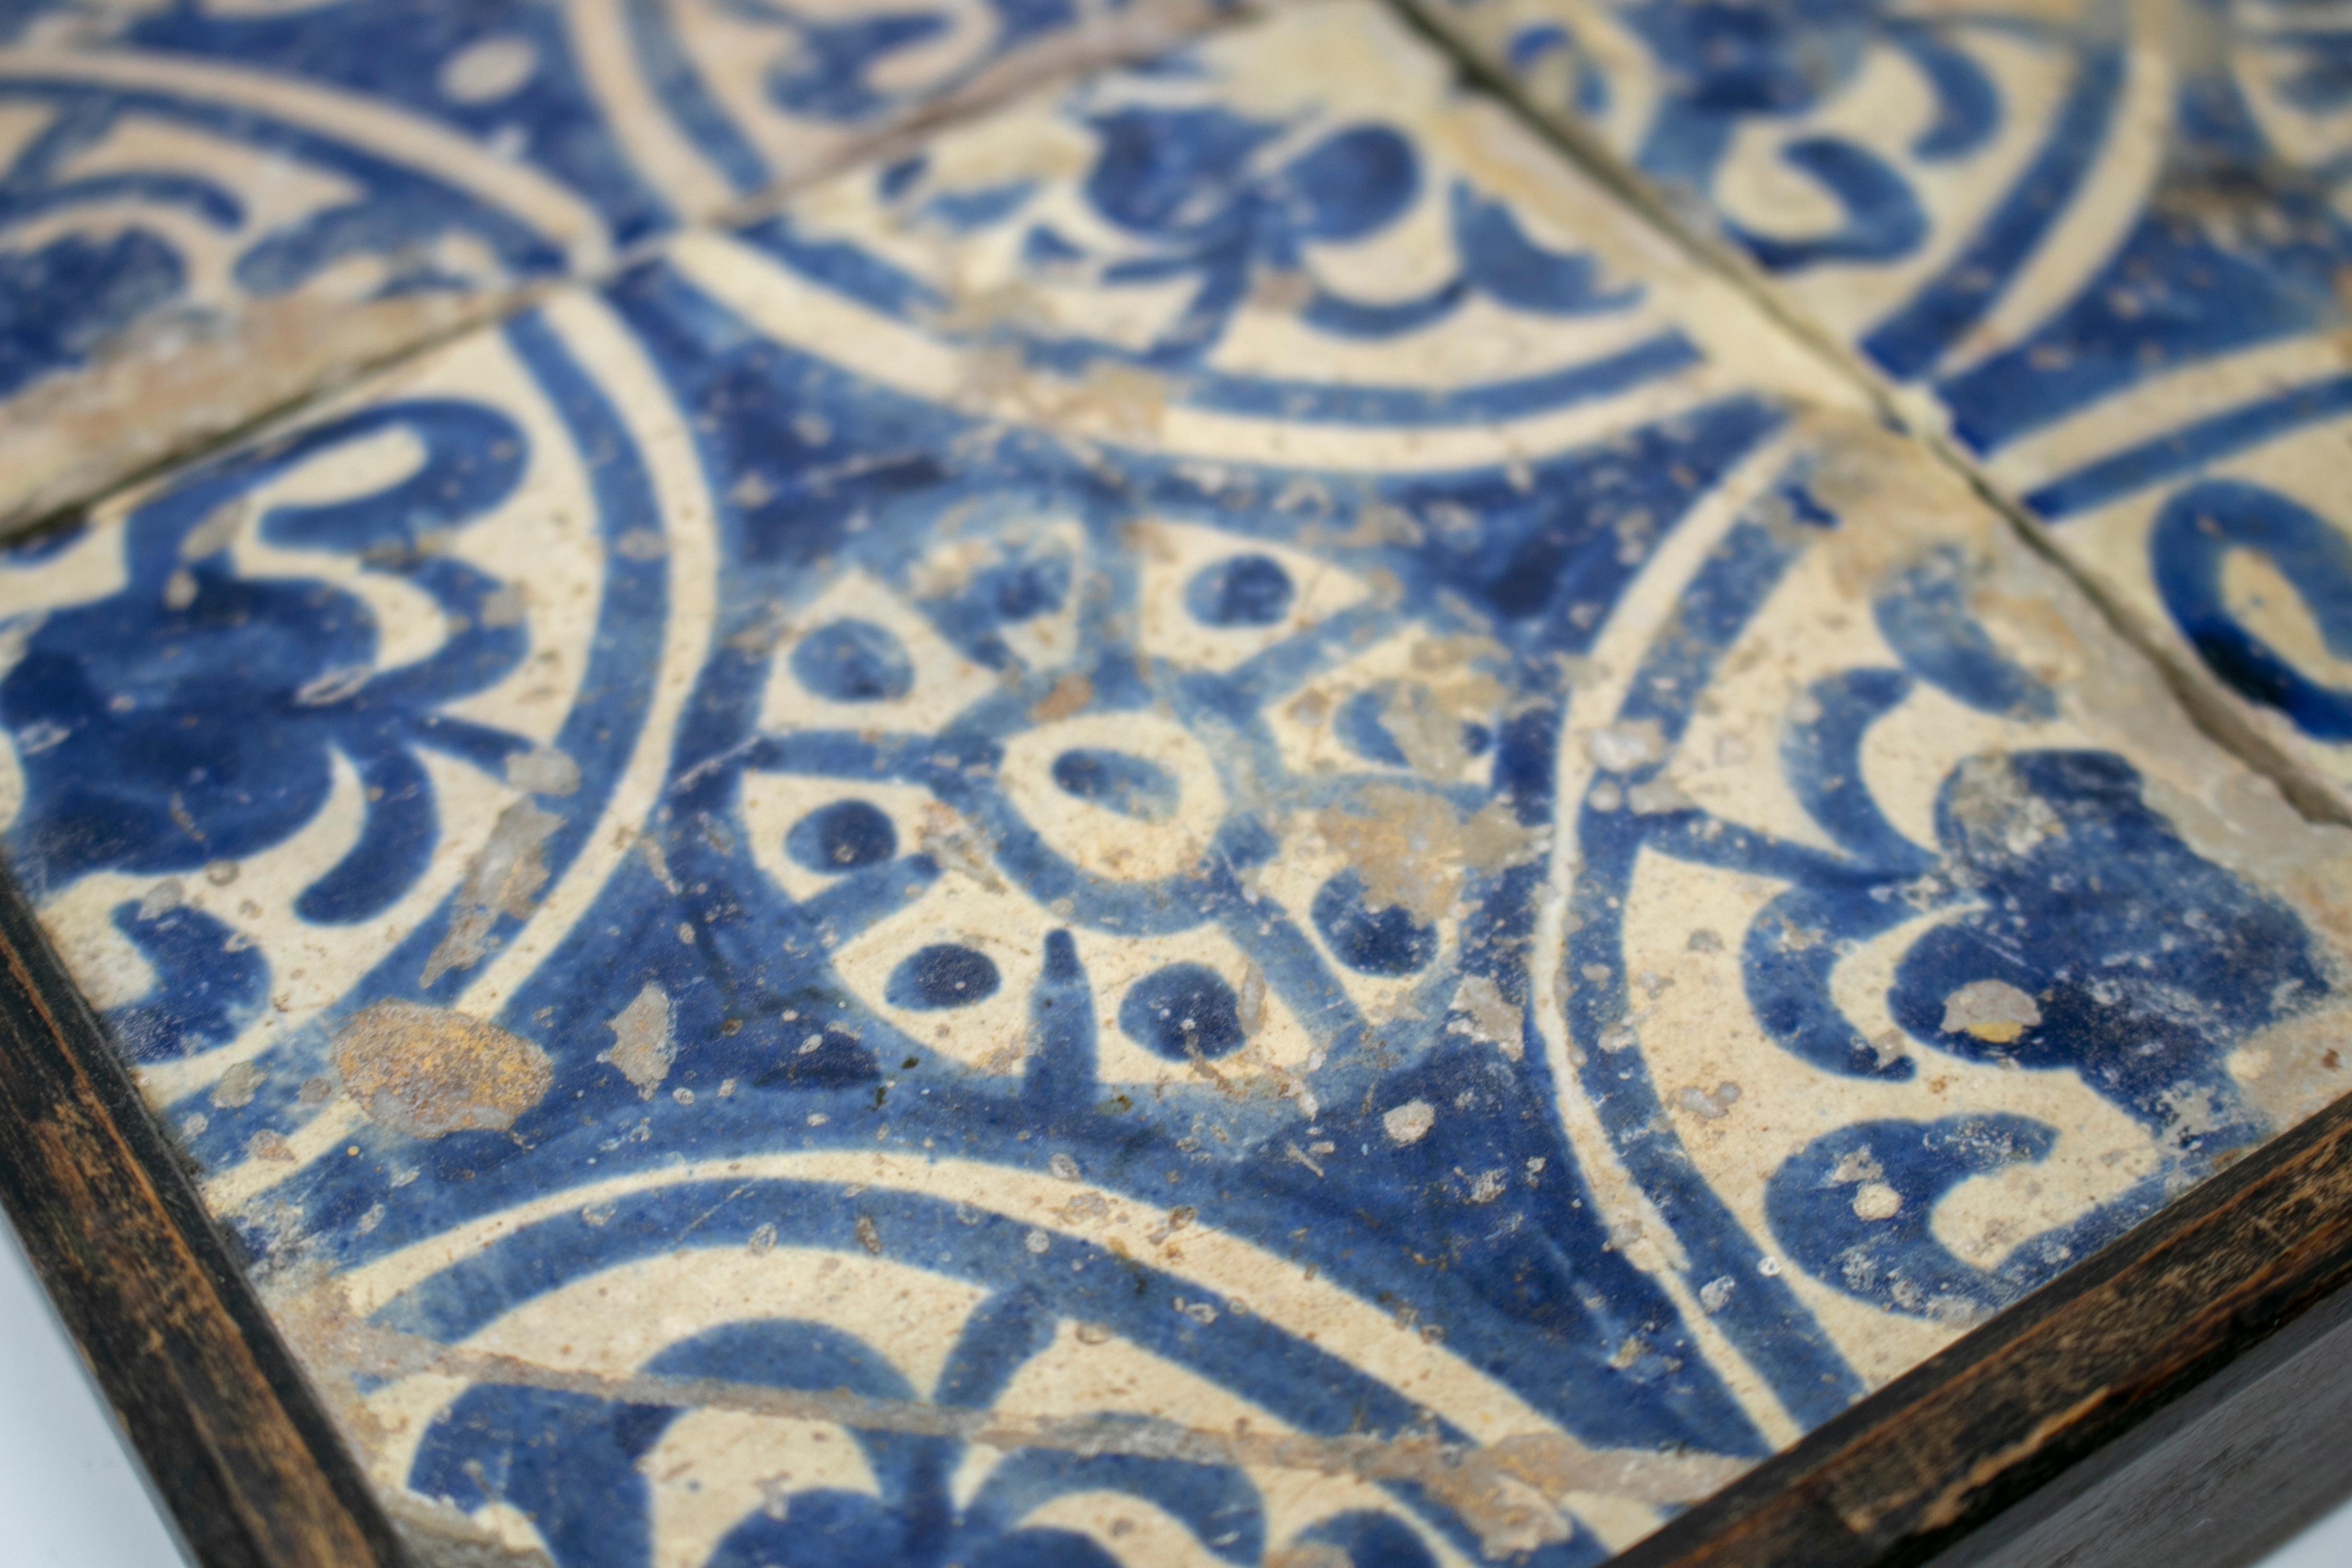 Ceramic 19th Century Panel with Four Spanish Glazed Manises Blue Cobalt Painted Tiles